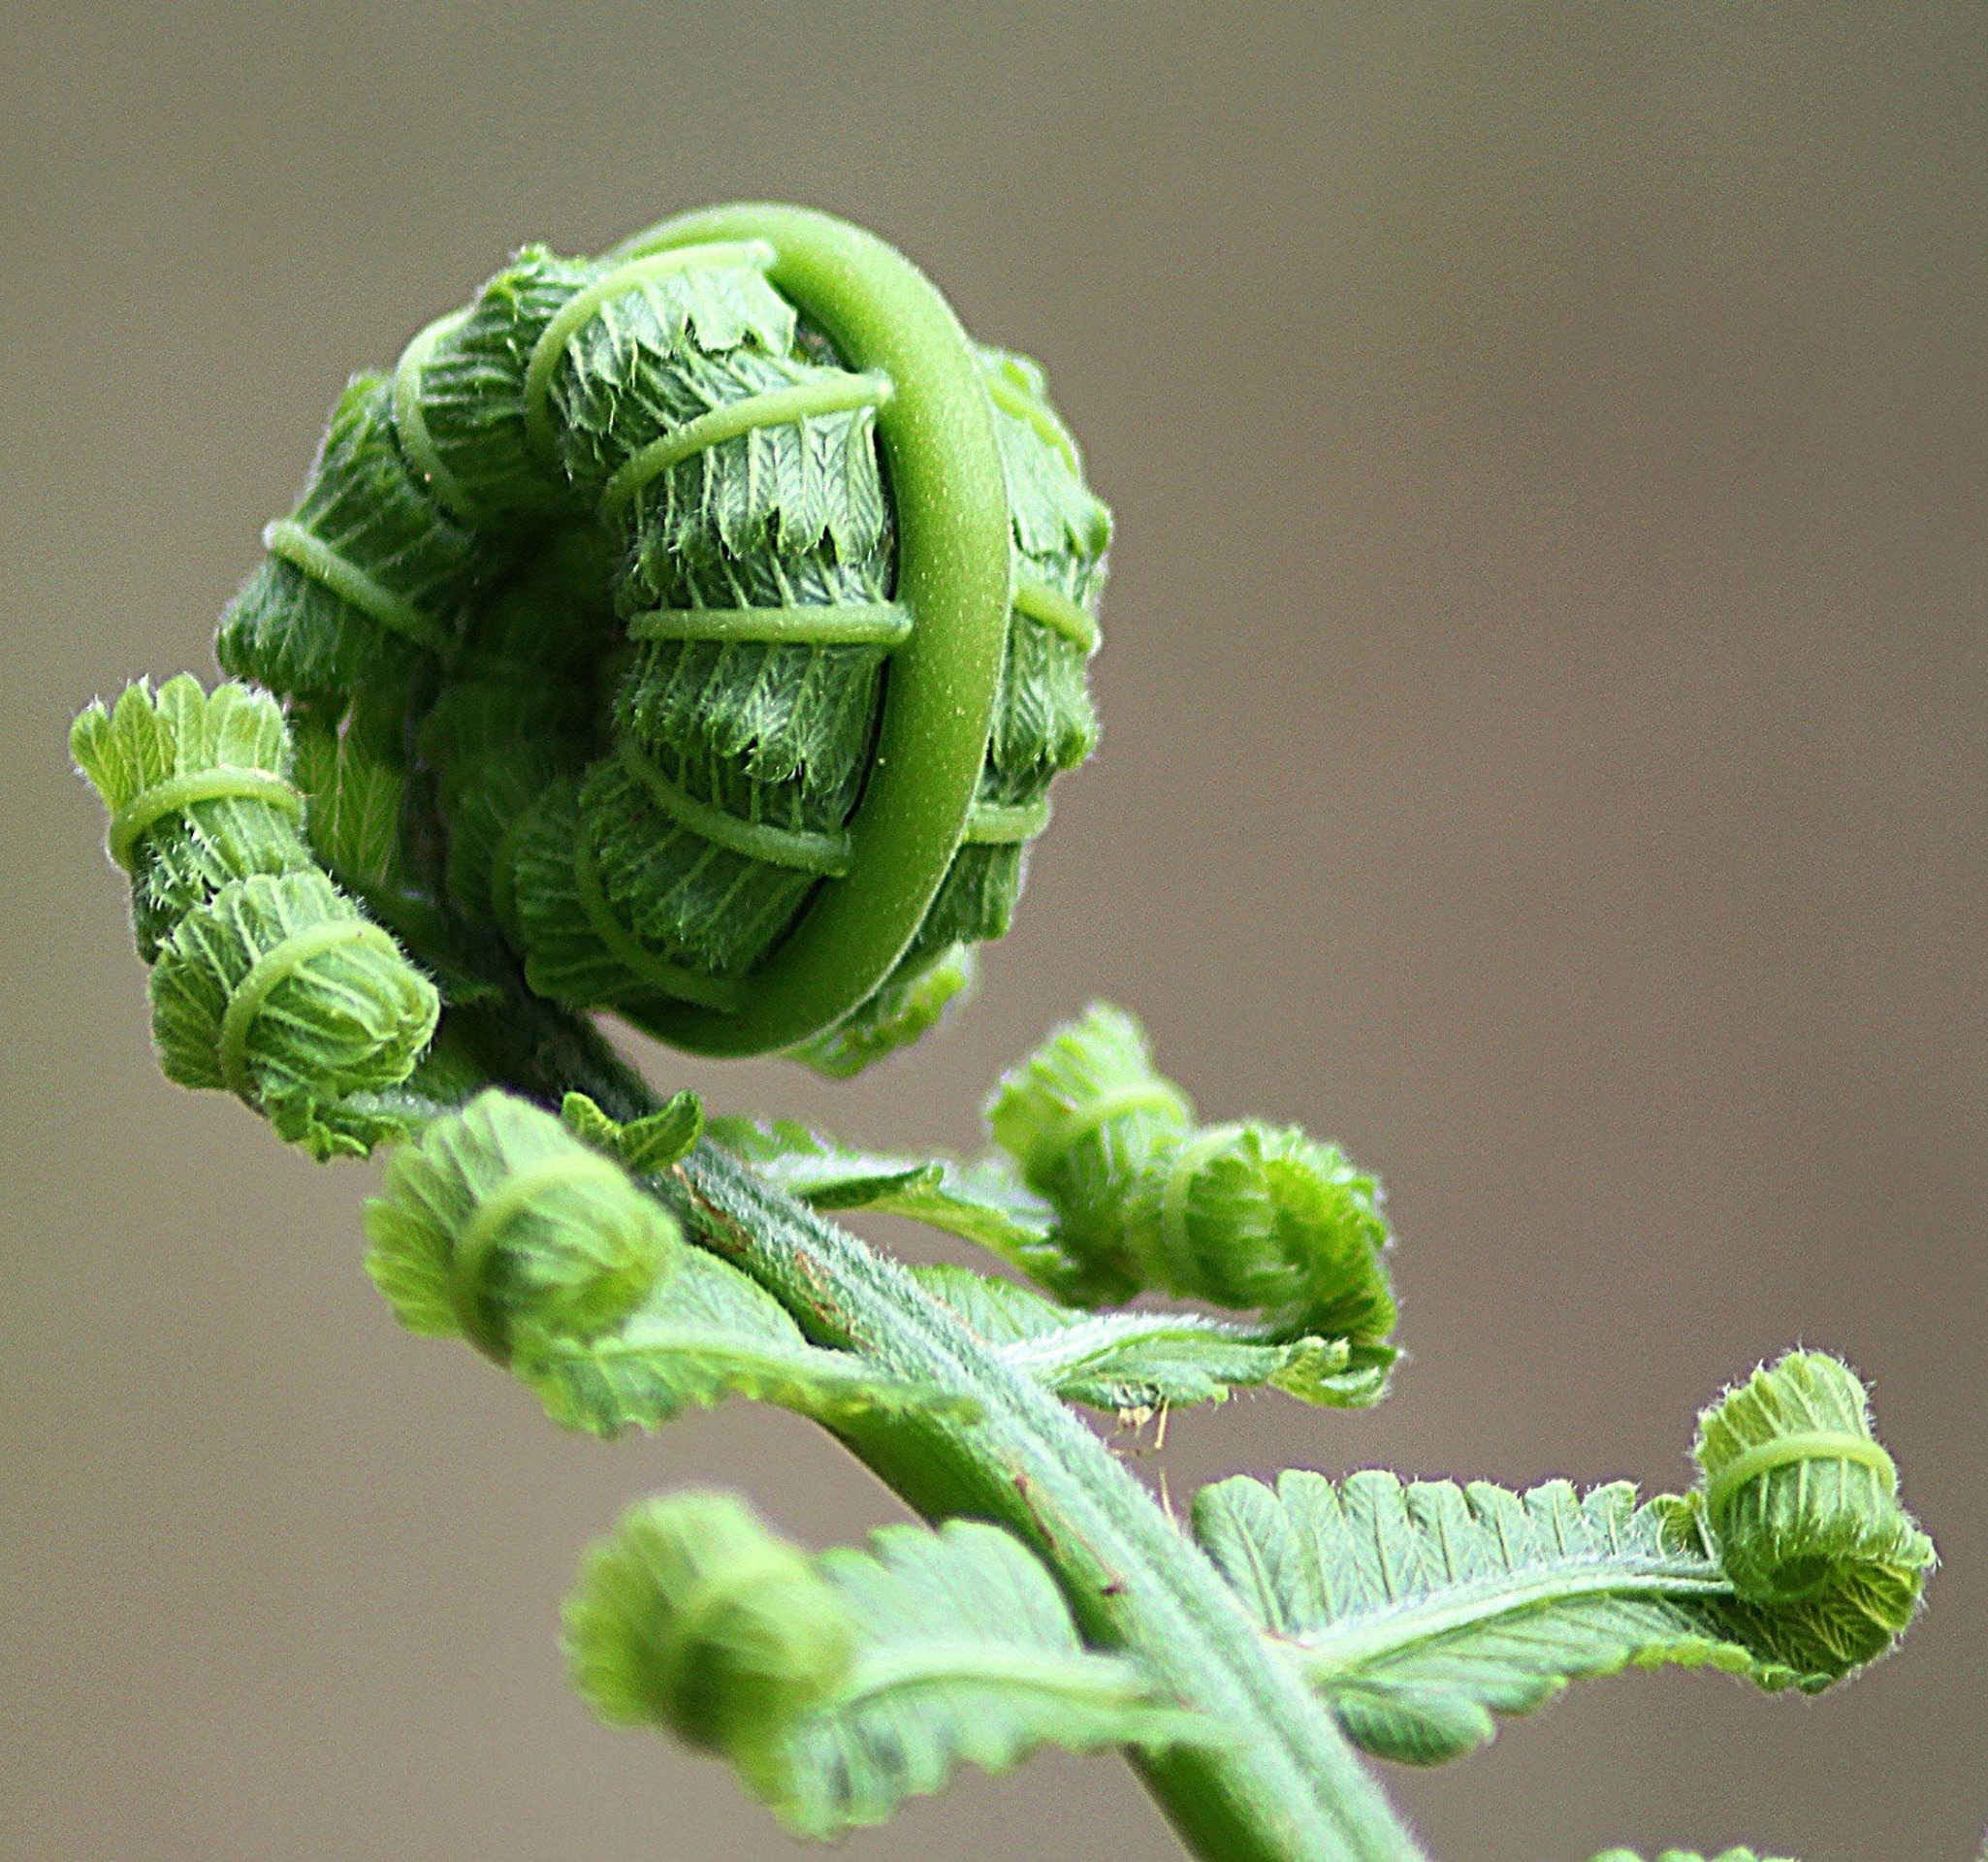 green fern about to unfurl